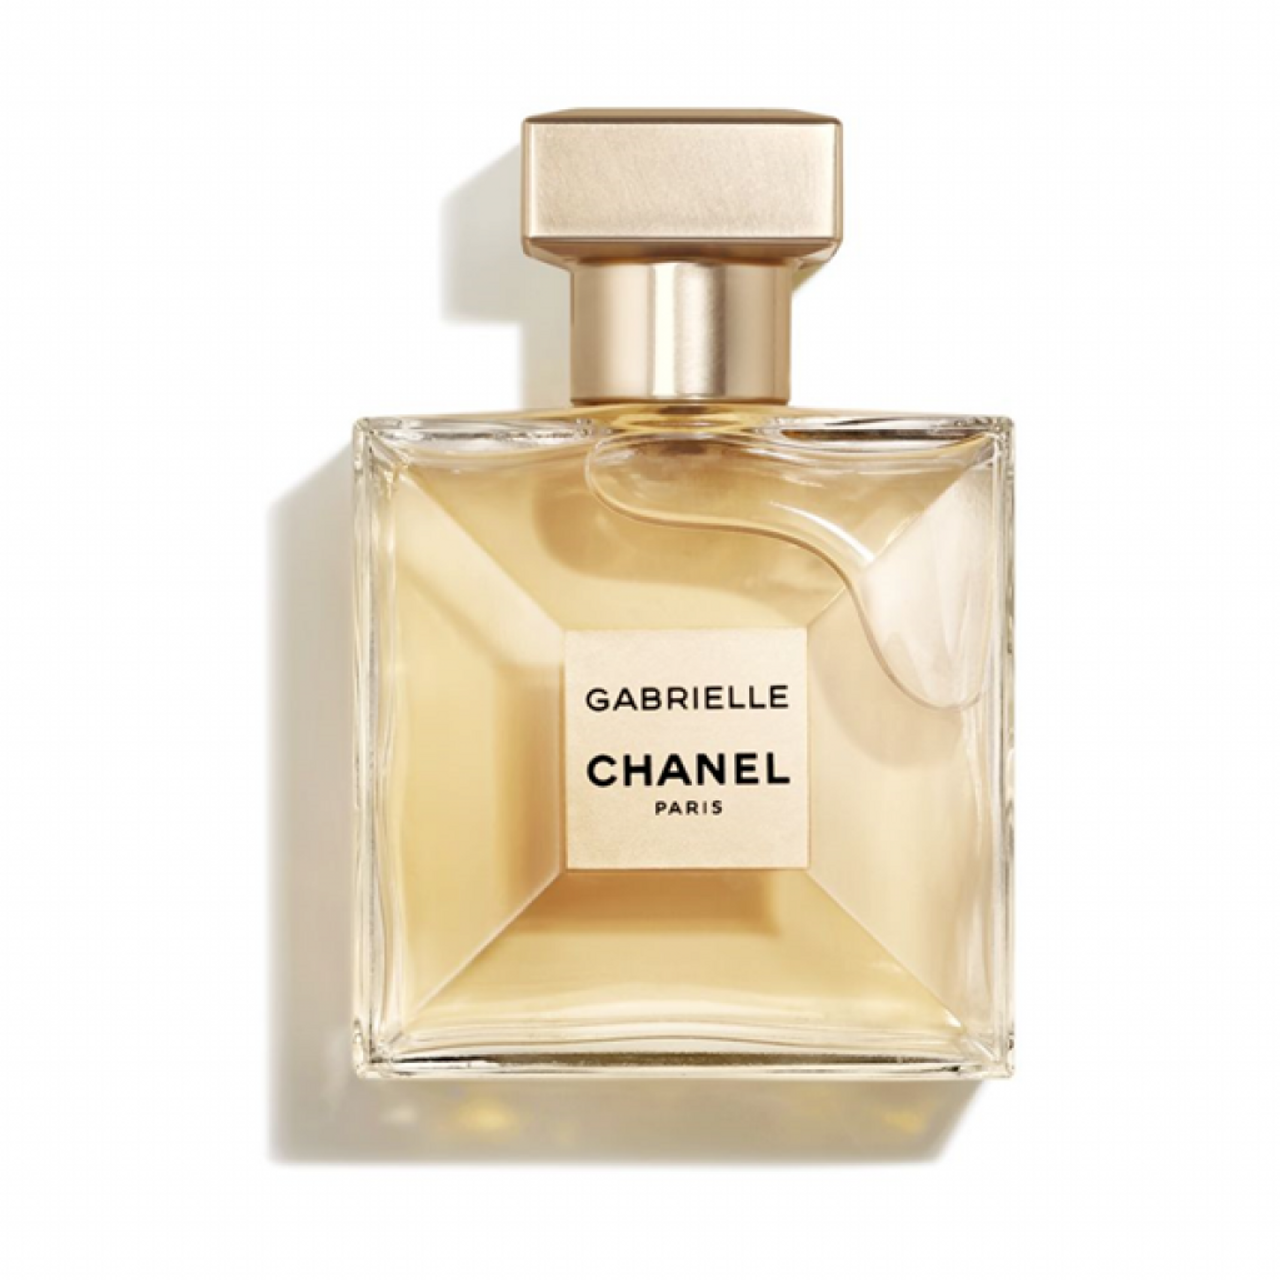 Gabrielle Essence by Chanel Eau De Parfum Spray 1.7 oz for Women